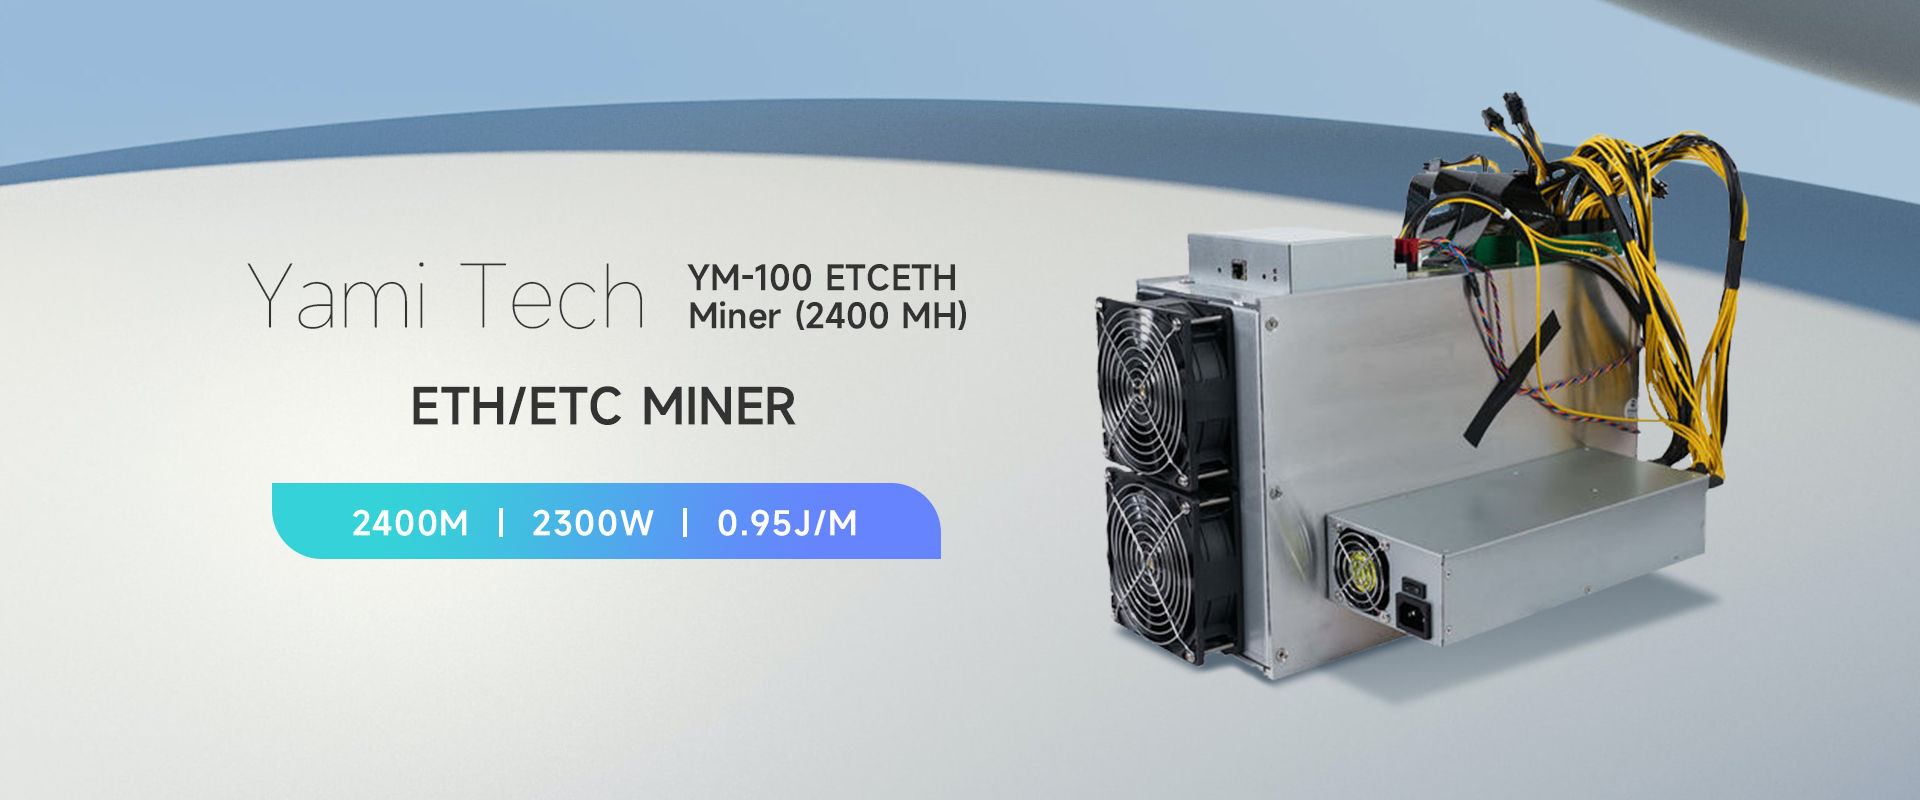 32-Yami-Tech-YM-100-ETCETH-Miner-(2400-MH)1